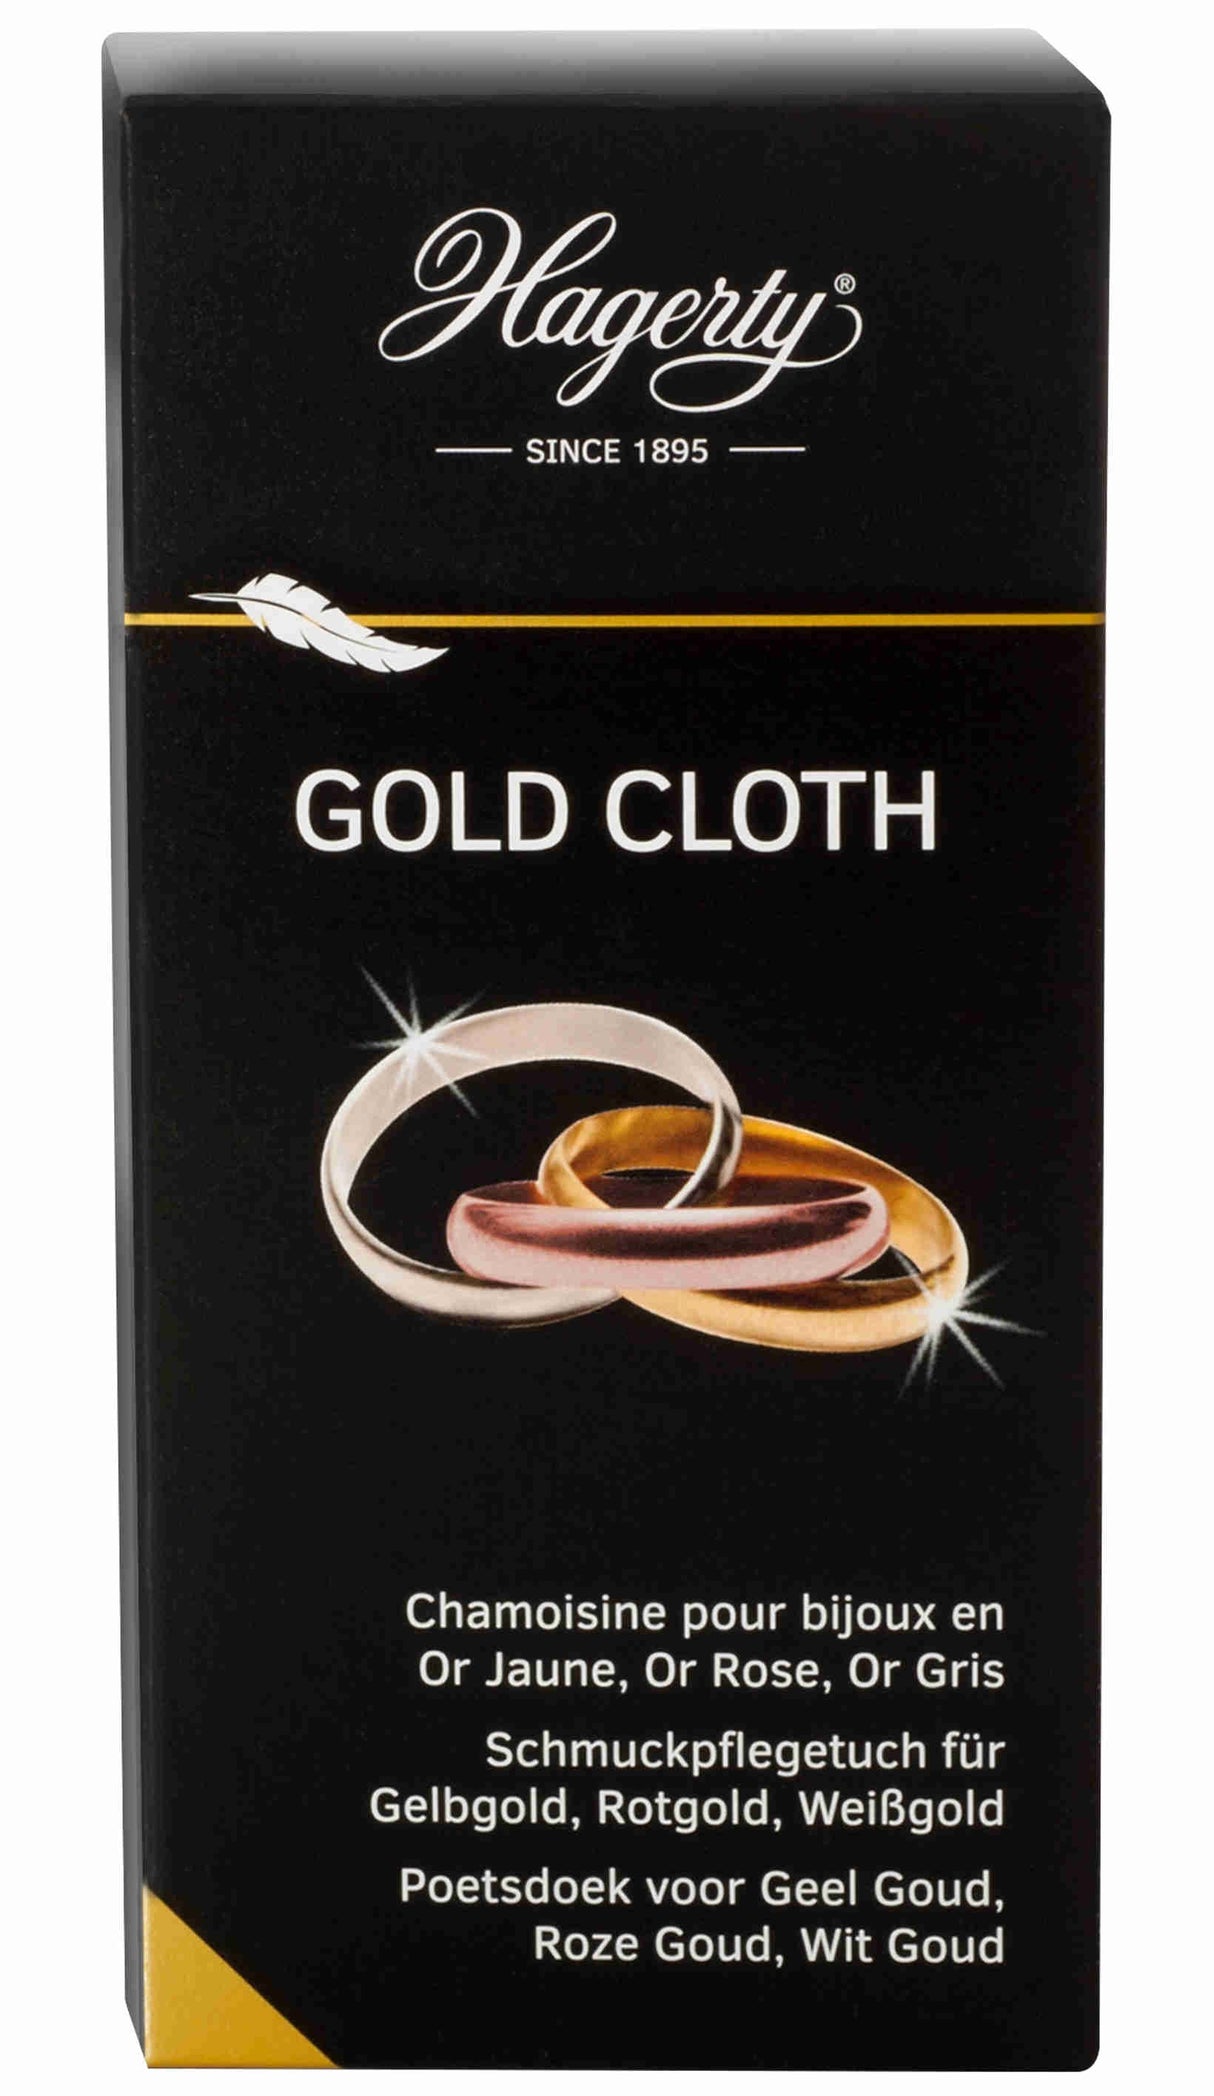 Gold cloth